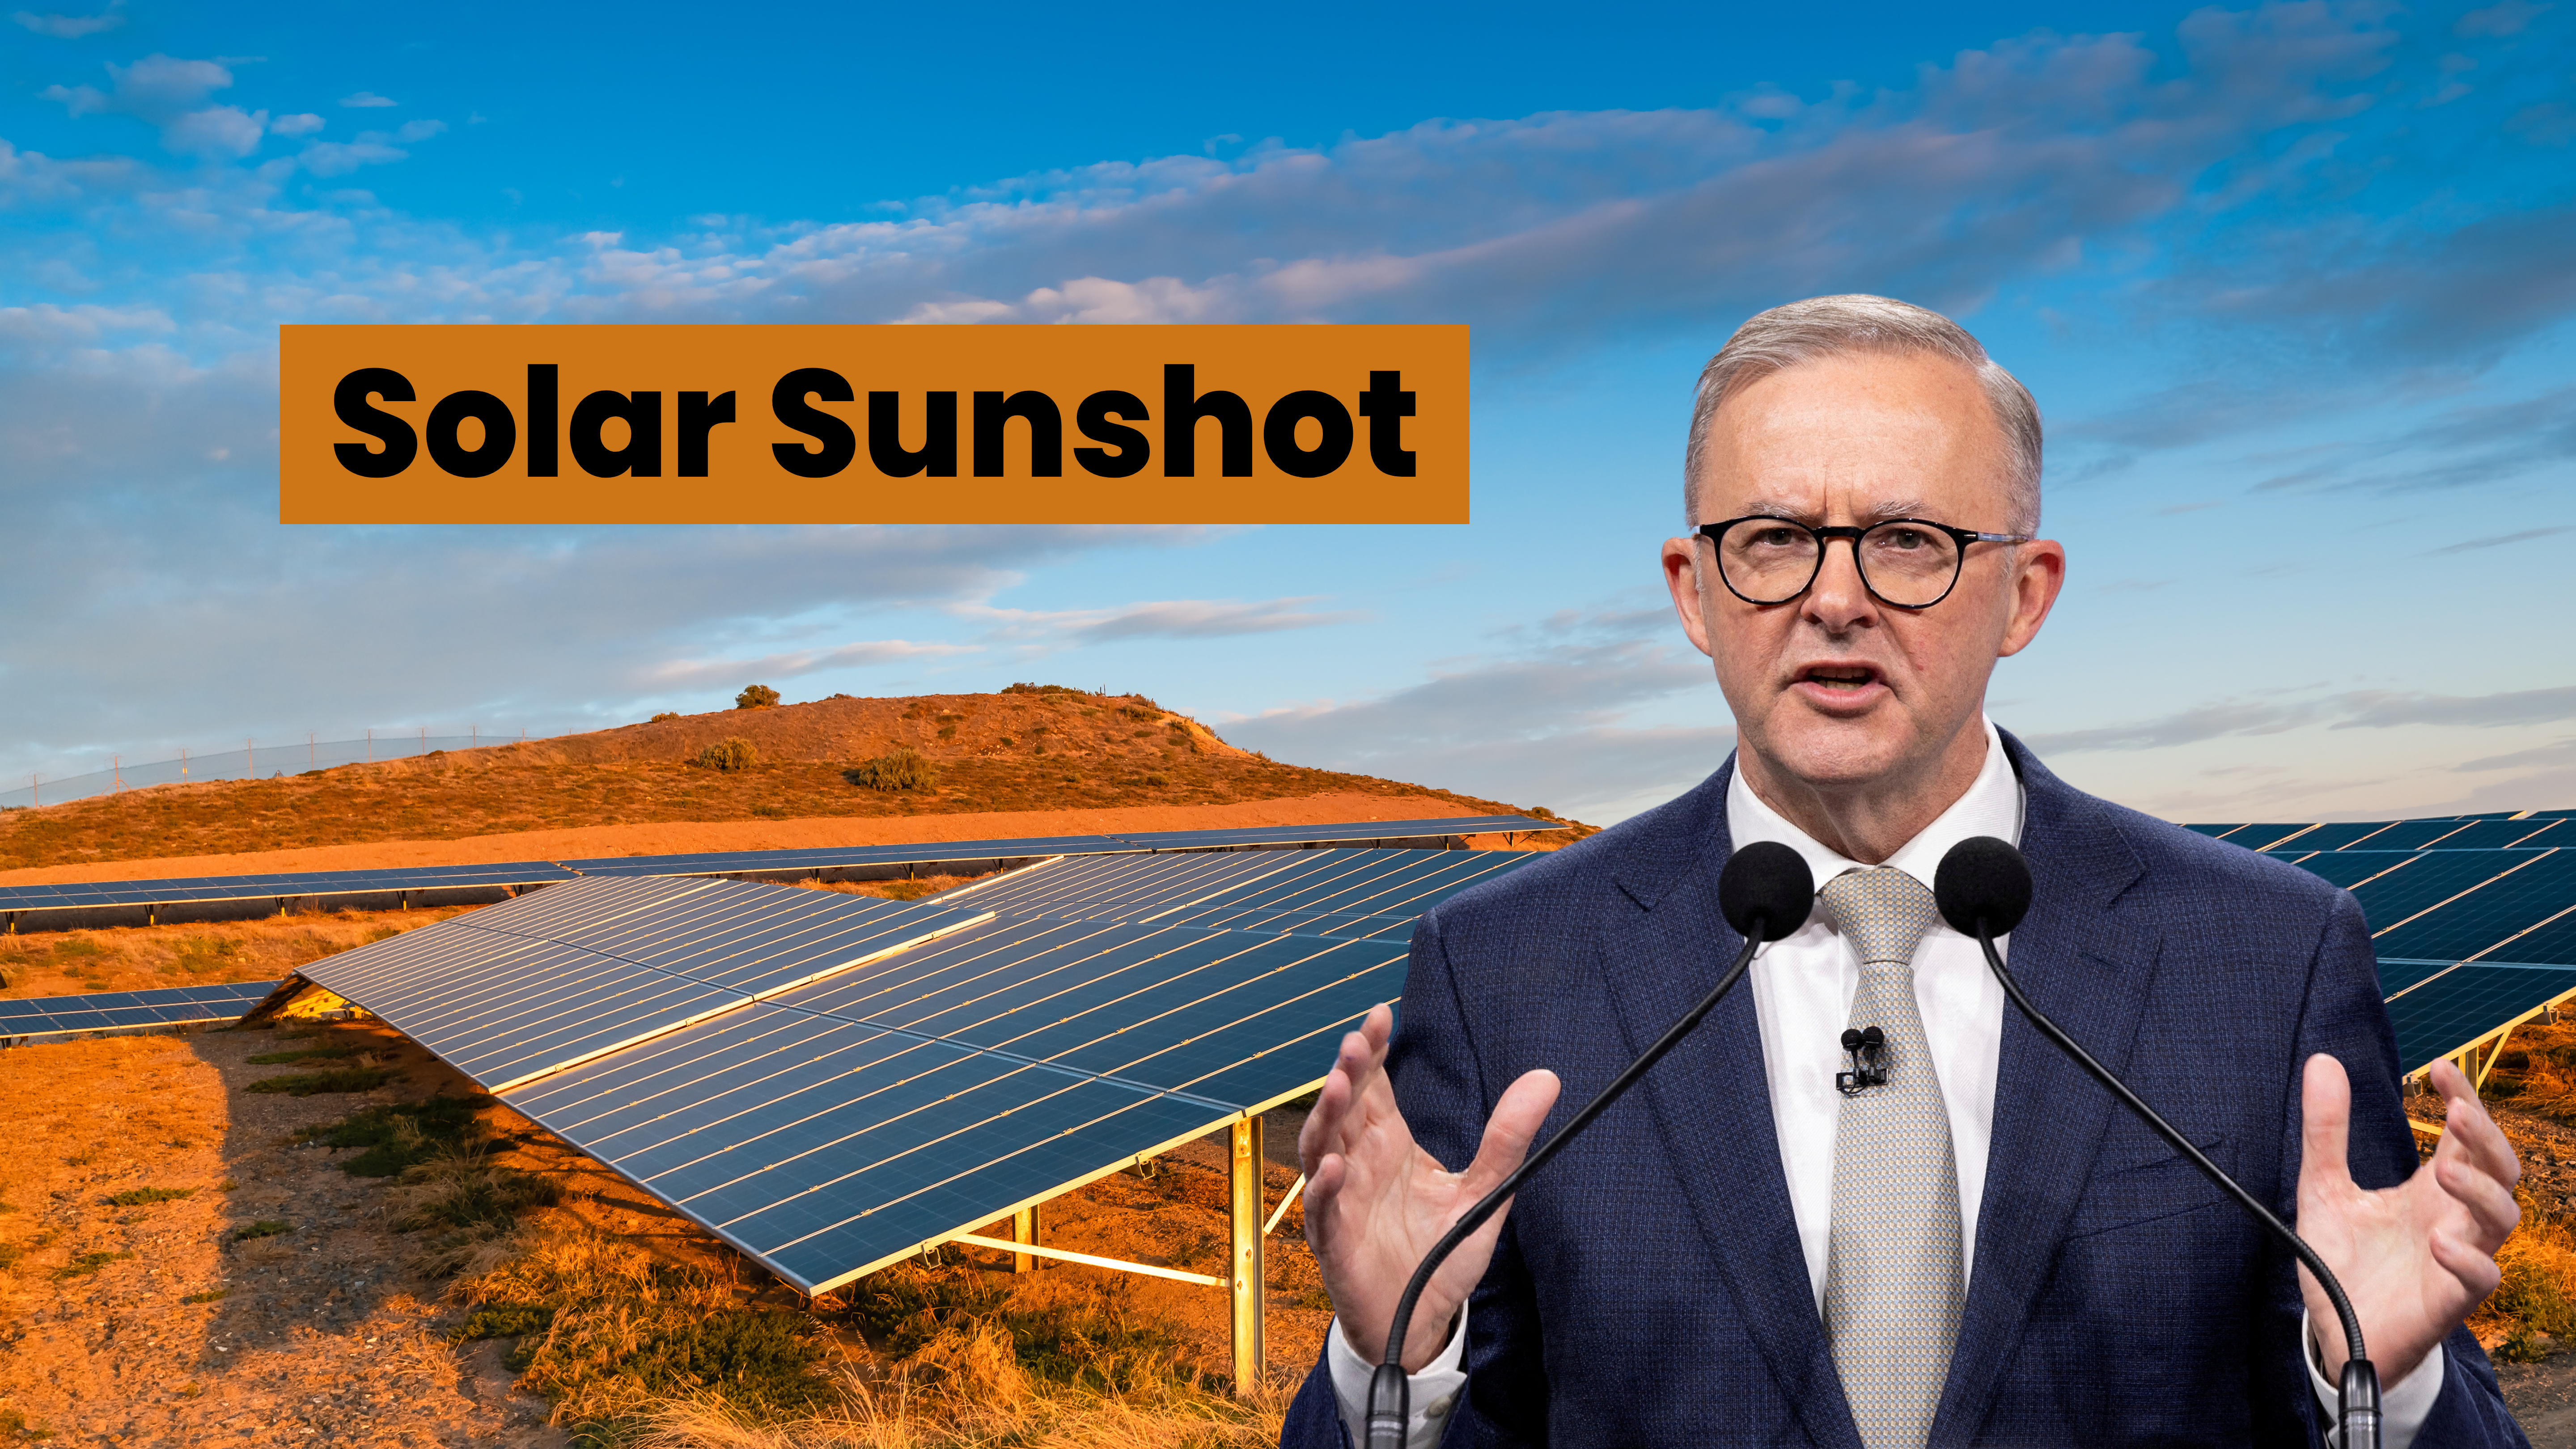 Australia Launches $1 billion Solar Sunshot Fund to expand solar panel manufacturing